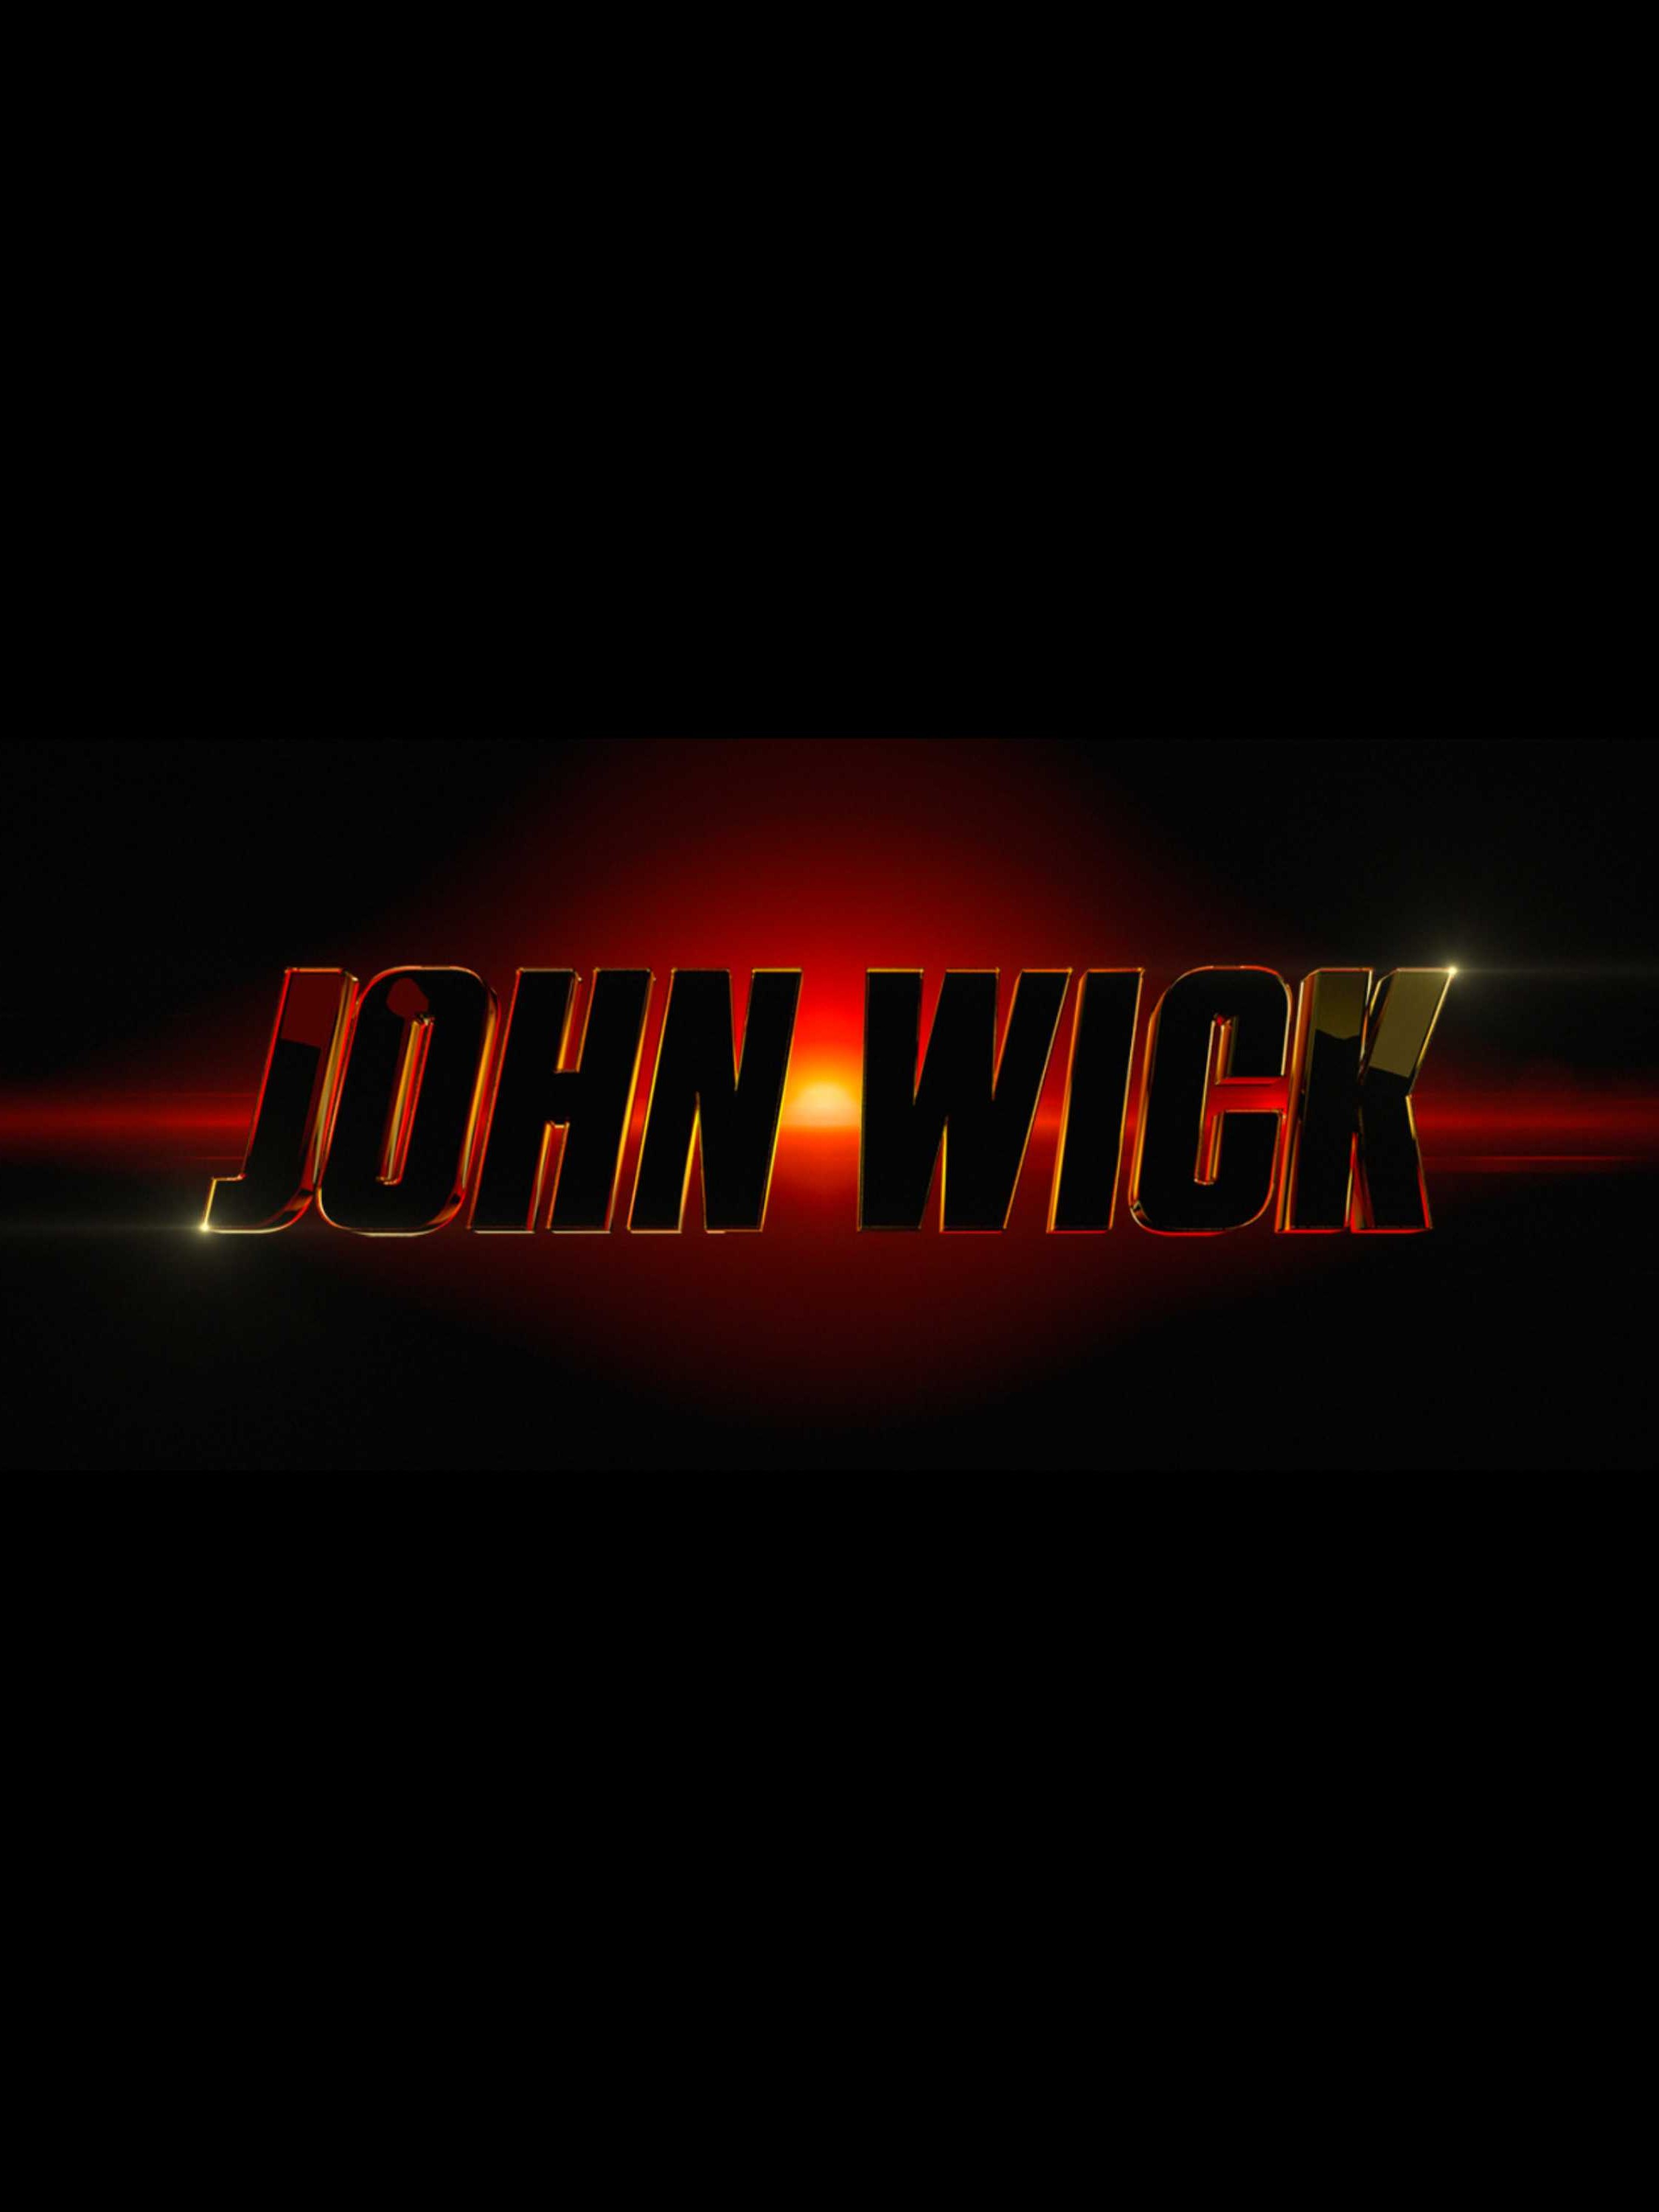 How to watch John Wick 4 – is it streaming? - Dexerto